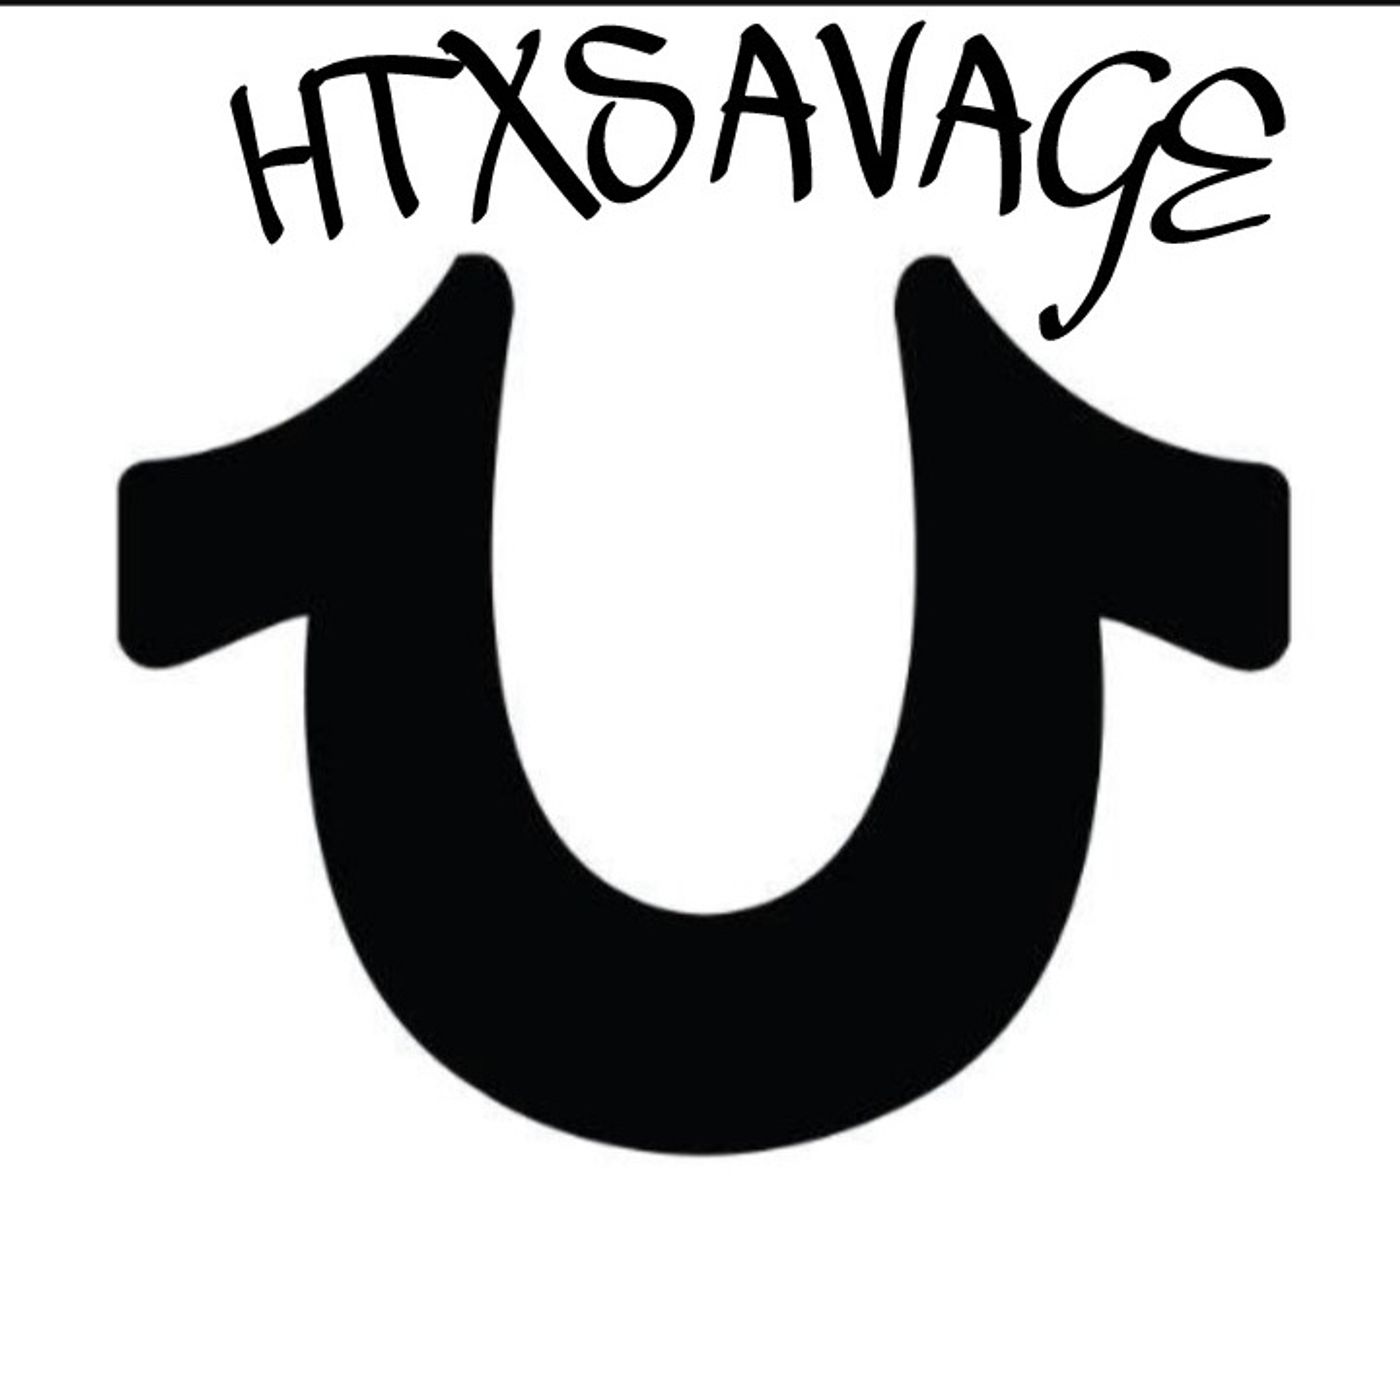 HTX SAVAGE's tracks